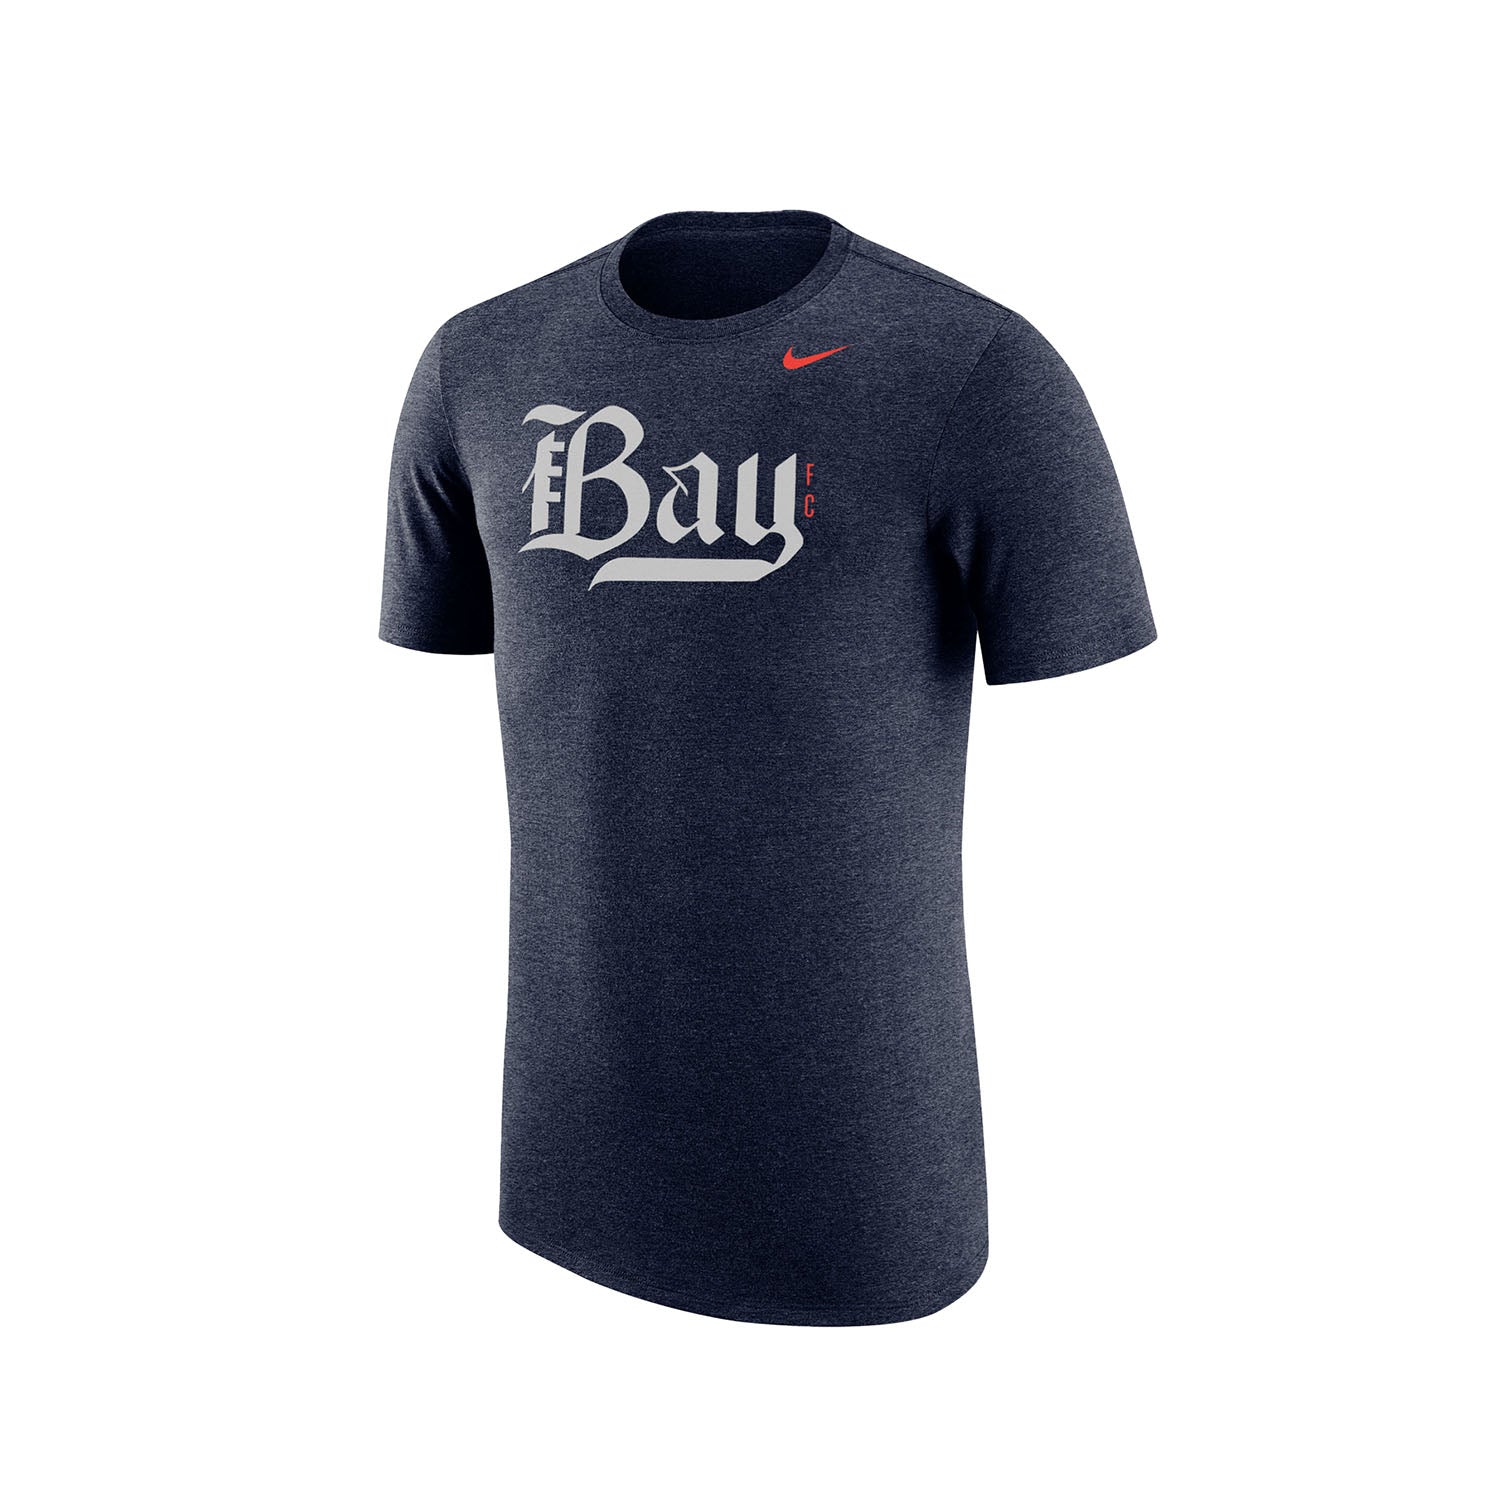 Men's Nike Bay FC Tri-Blend Navy Tee - Front View